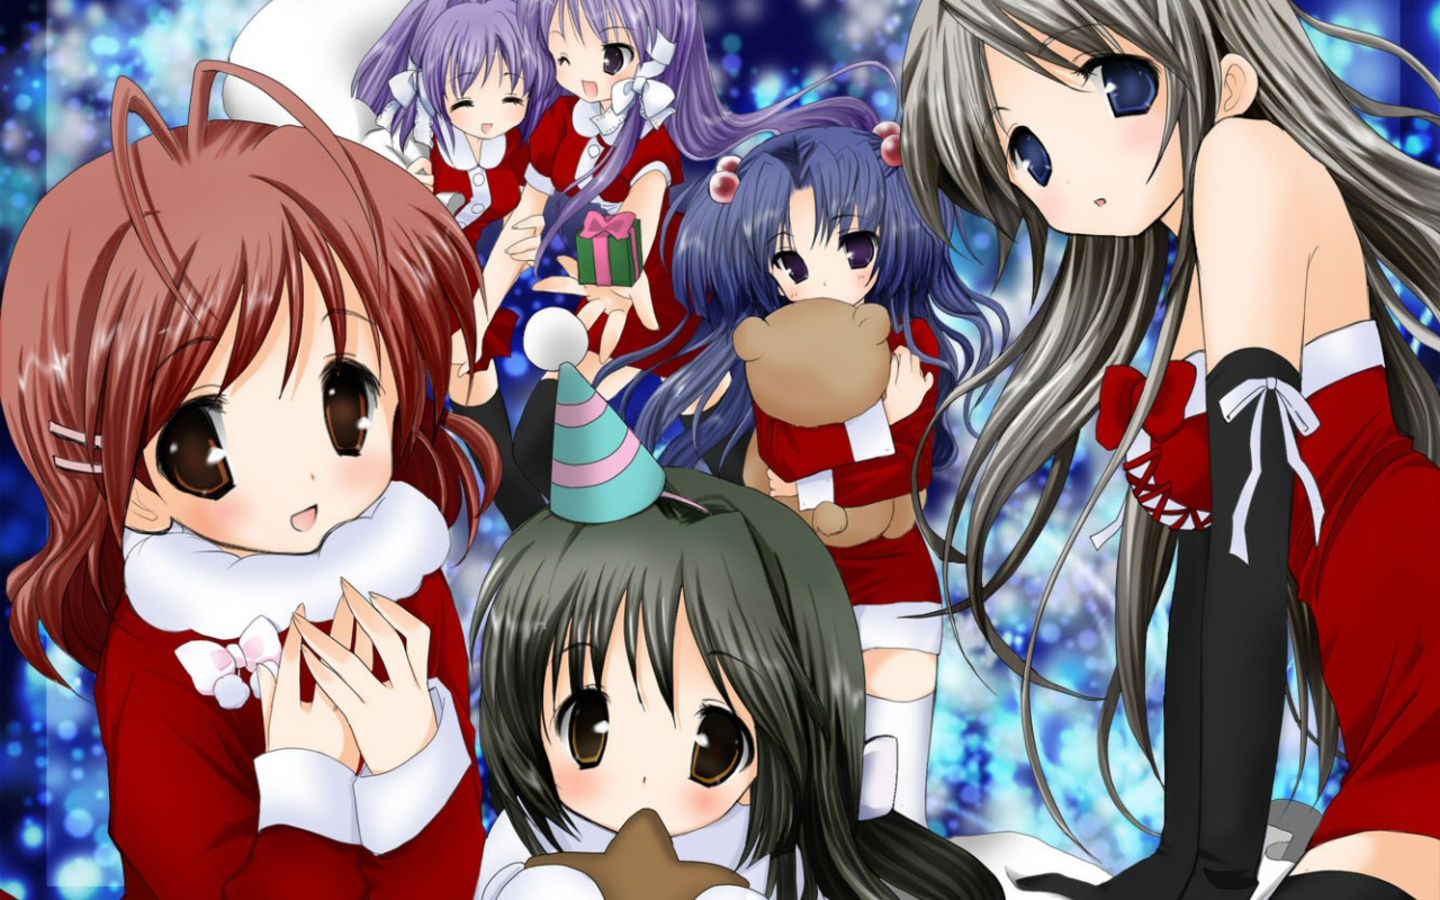 Free Cute Anime Girl in Christmas Image wallpaper Wallpaper Wallpaper 88142